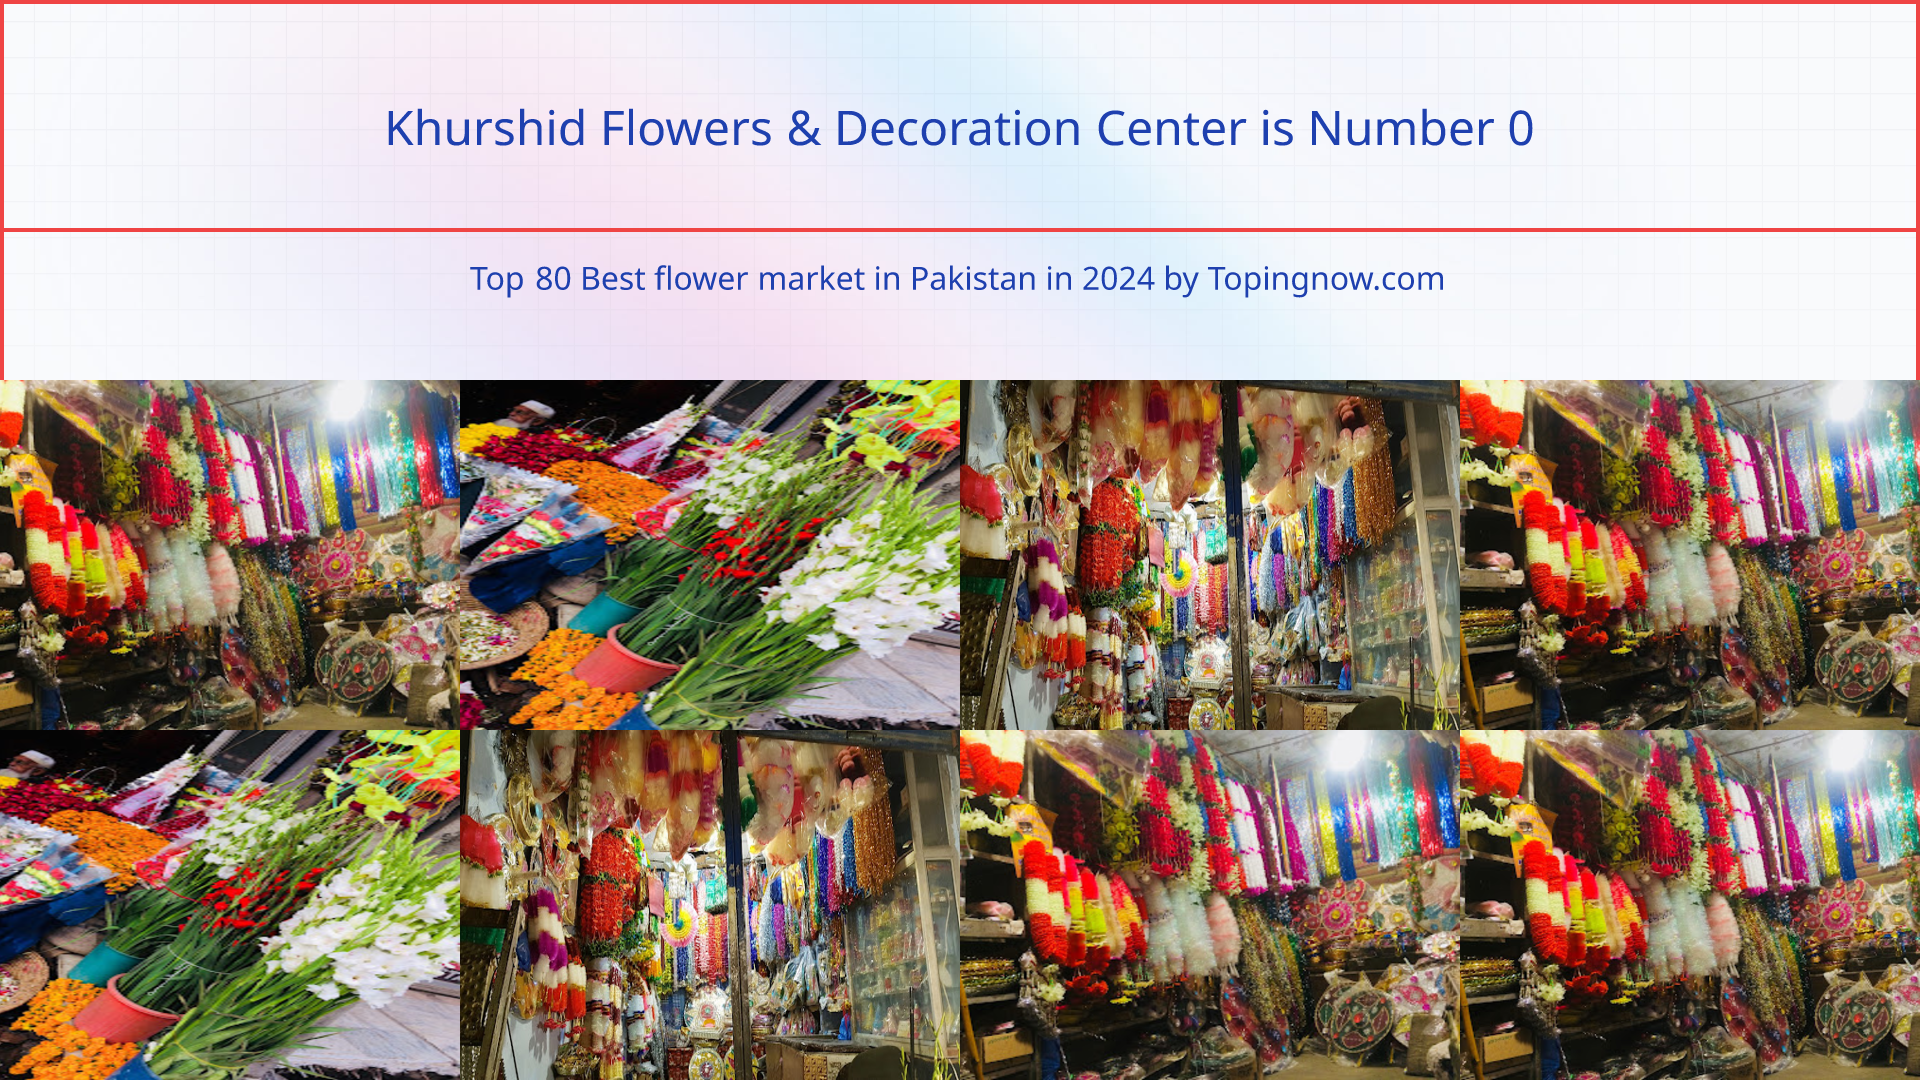 Khurshid Flowers & Decoration Center: Top 80 Best flower market in Pakistan in 2024